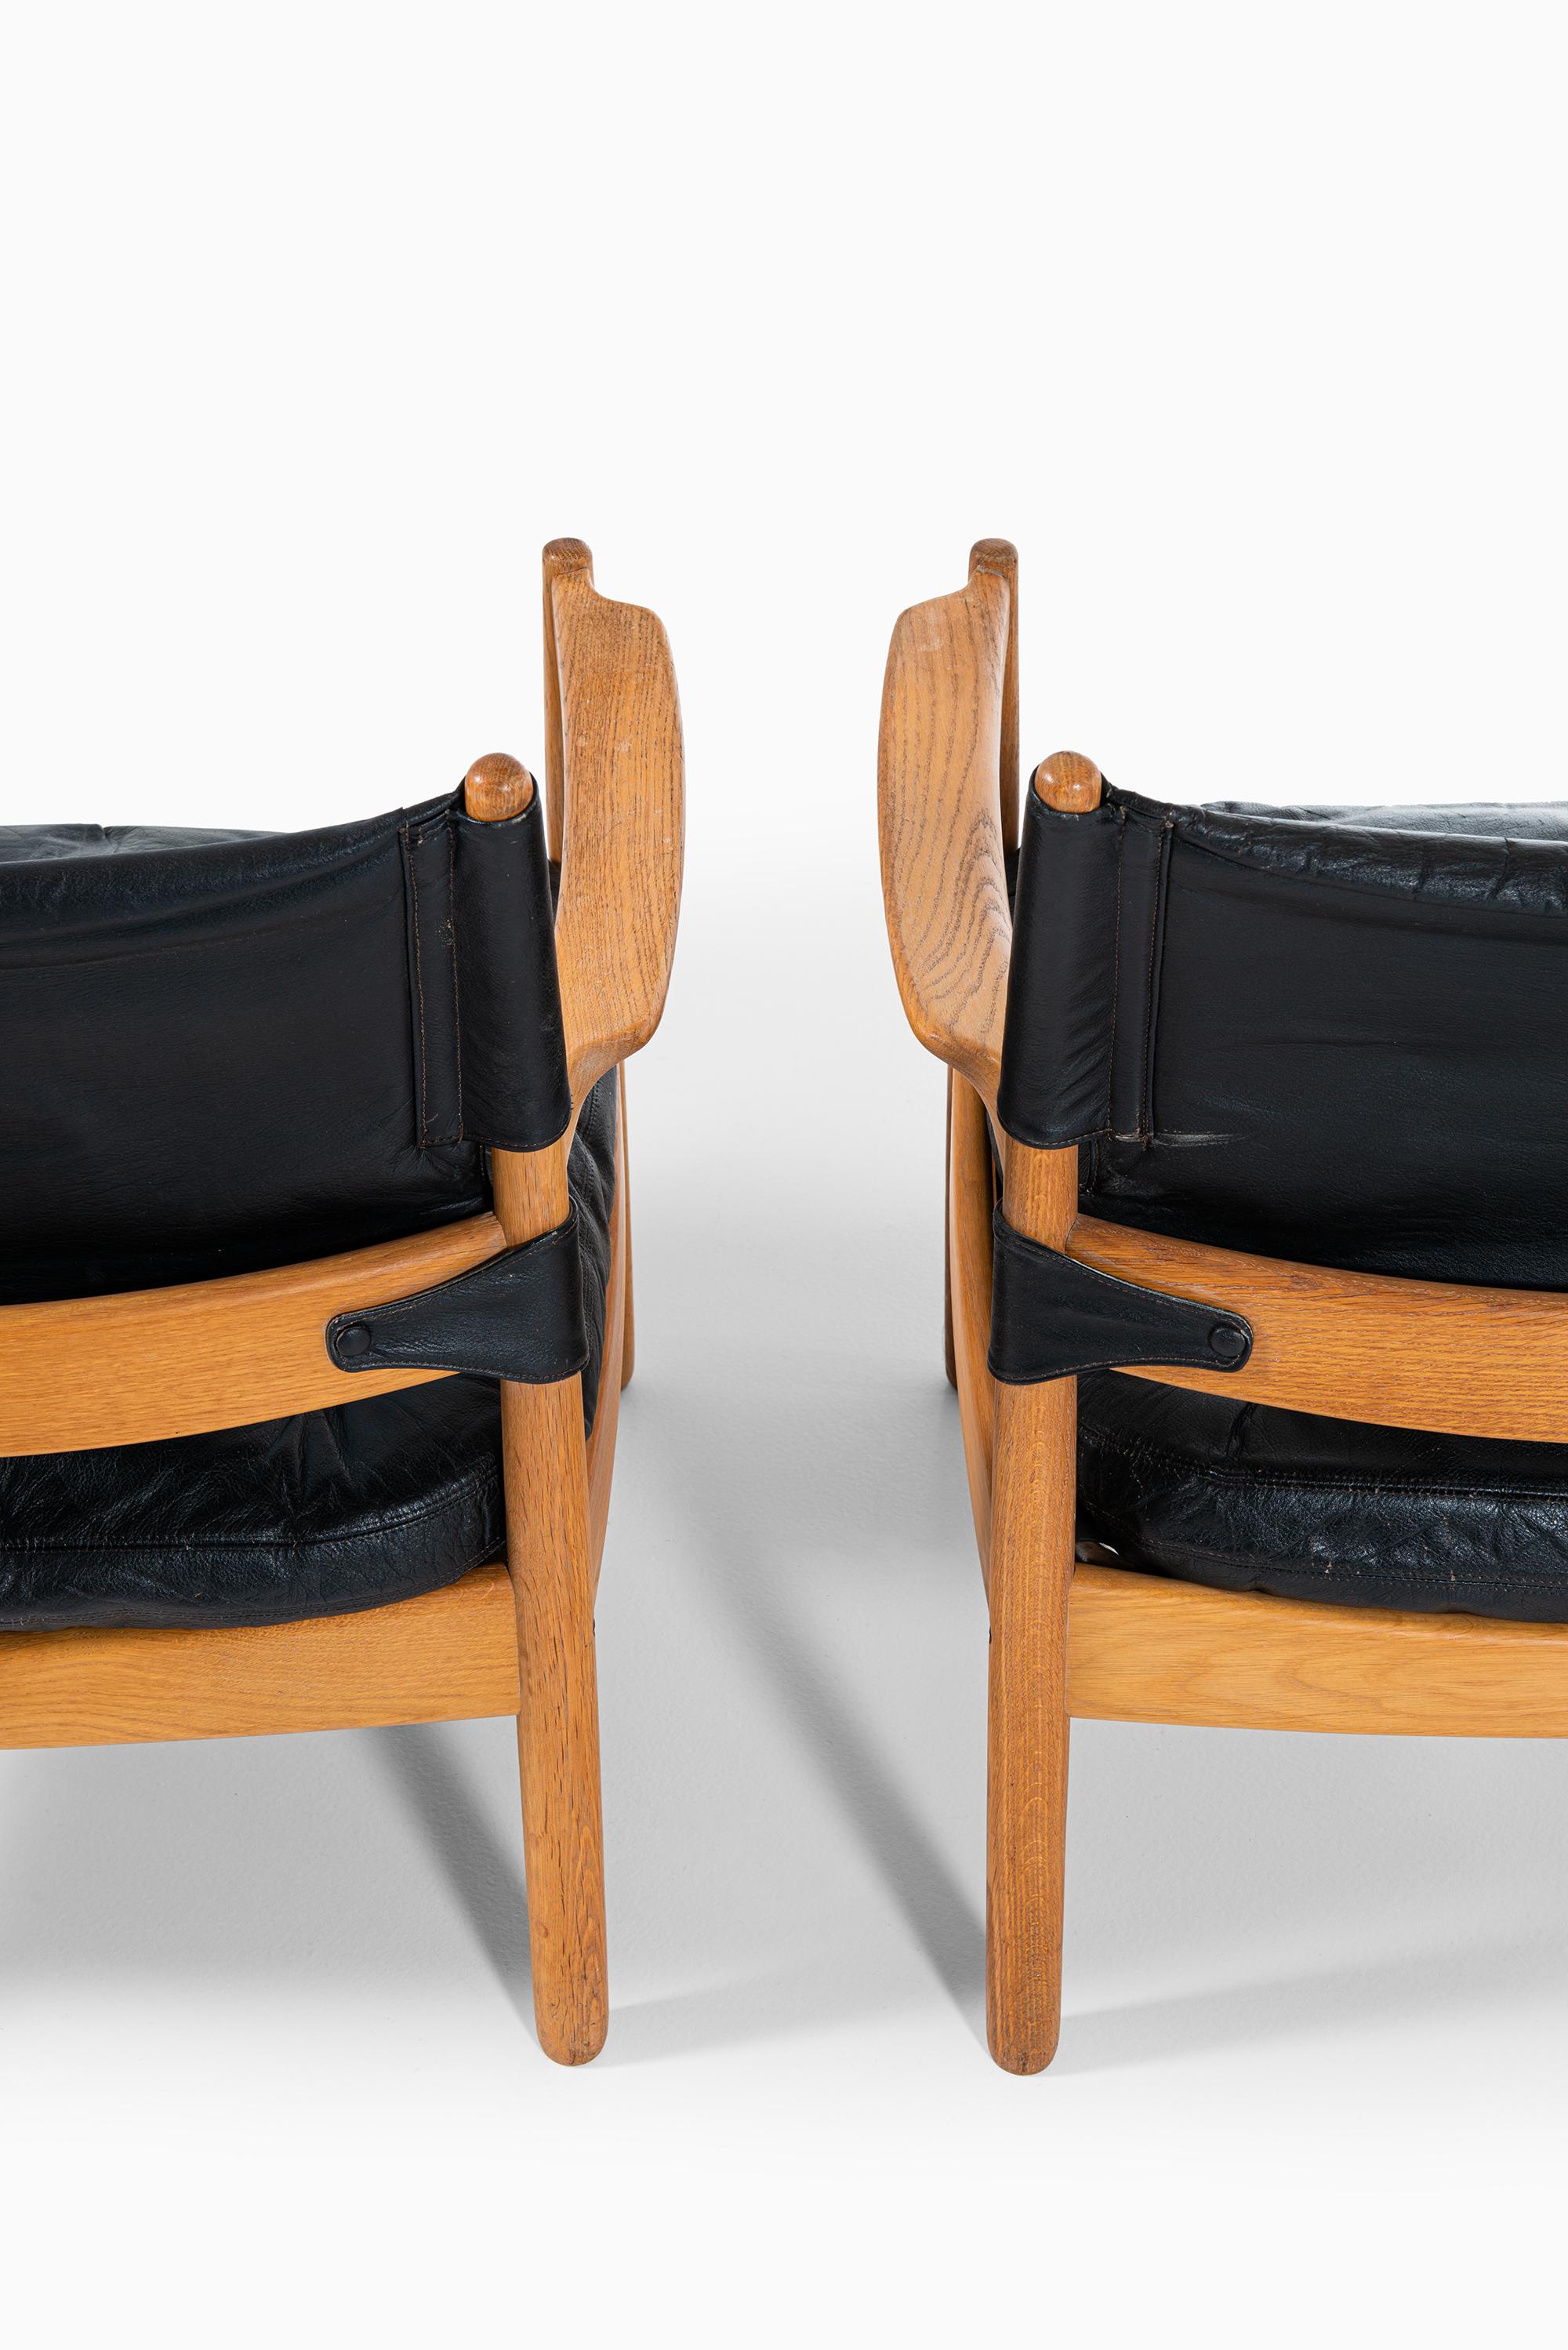 Gunnar Myrstrand Easy Chairs Produced by Källemo in Sweden In Good Condition In Limhamn, Skåne län